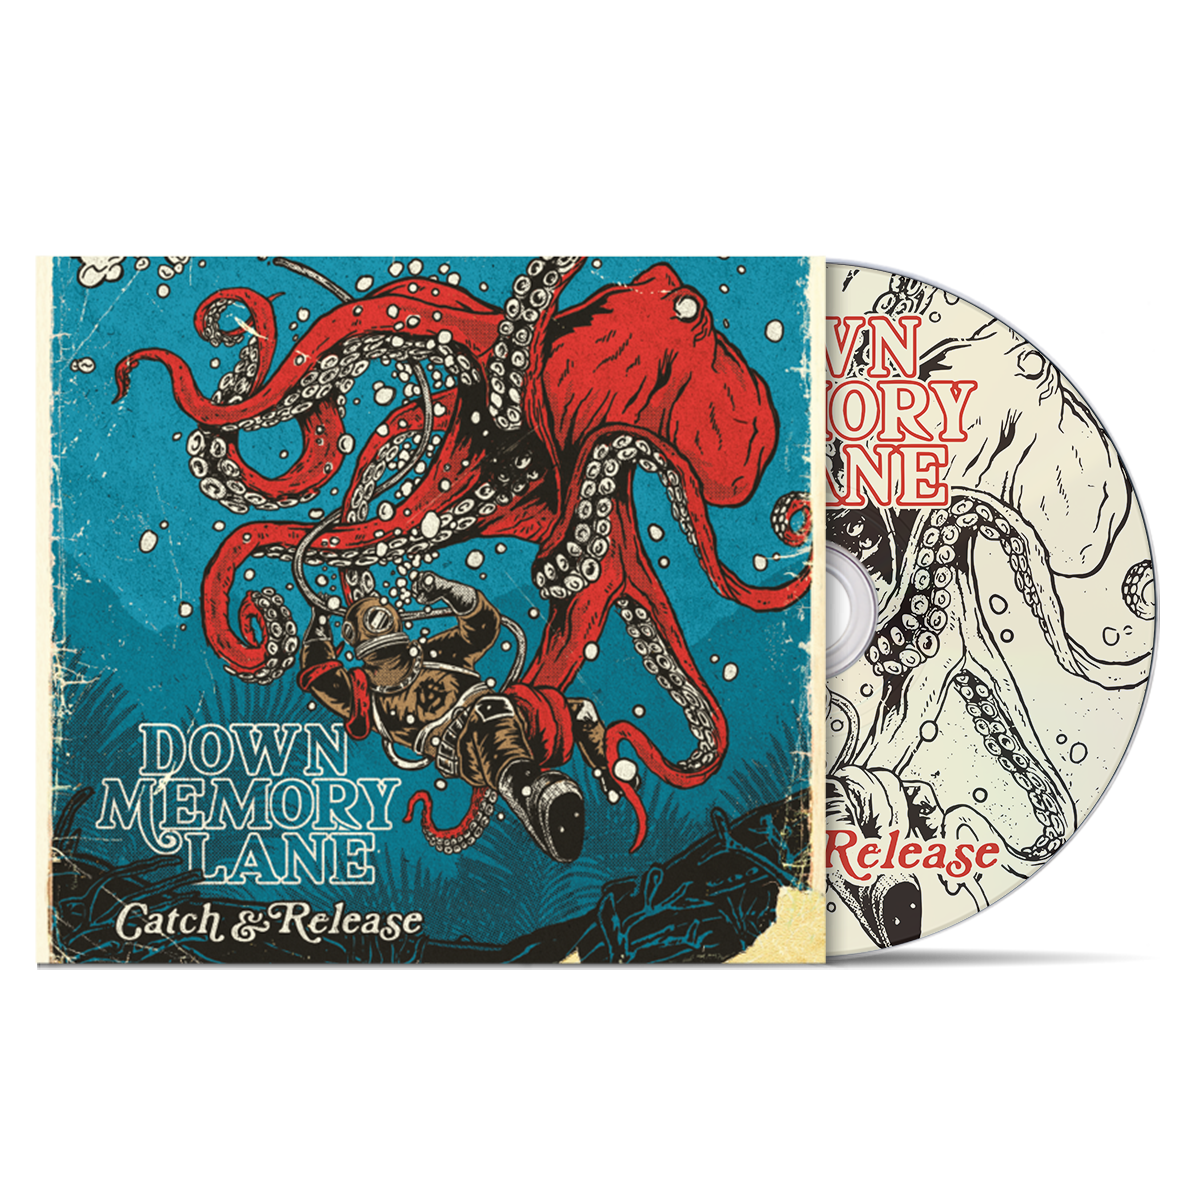 DOWN MEMORY LANE - "Catch & Release" (CD)